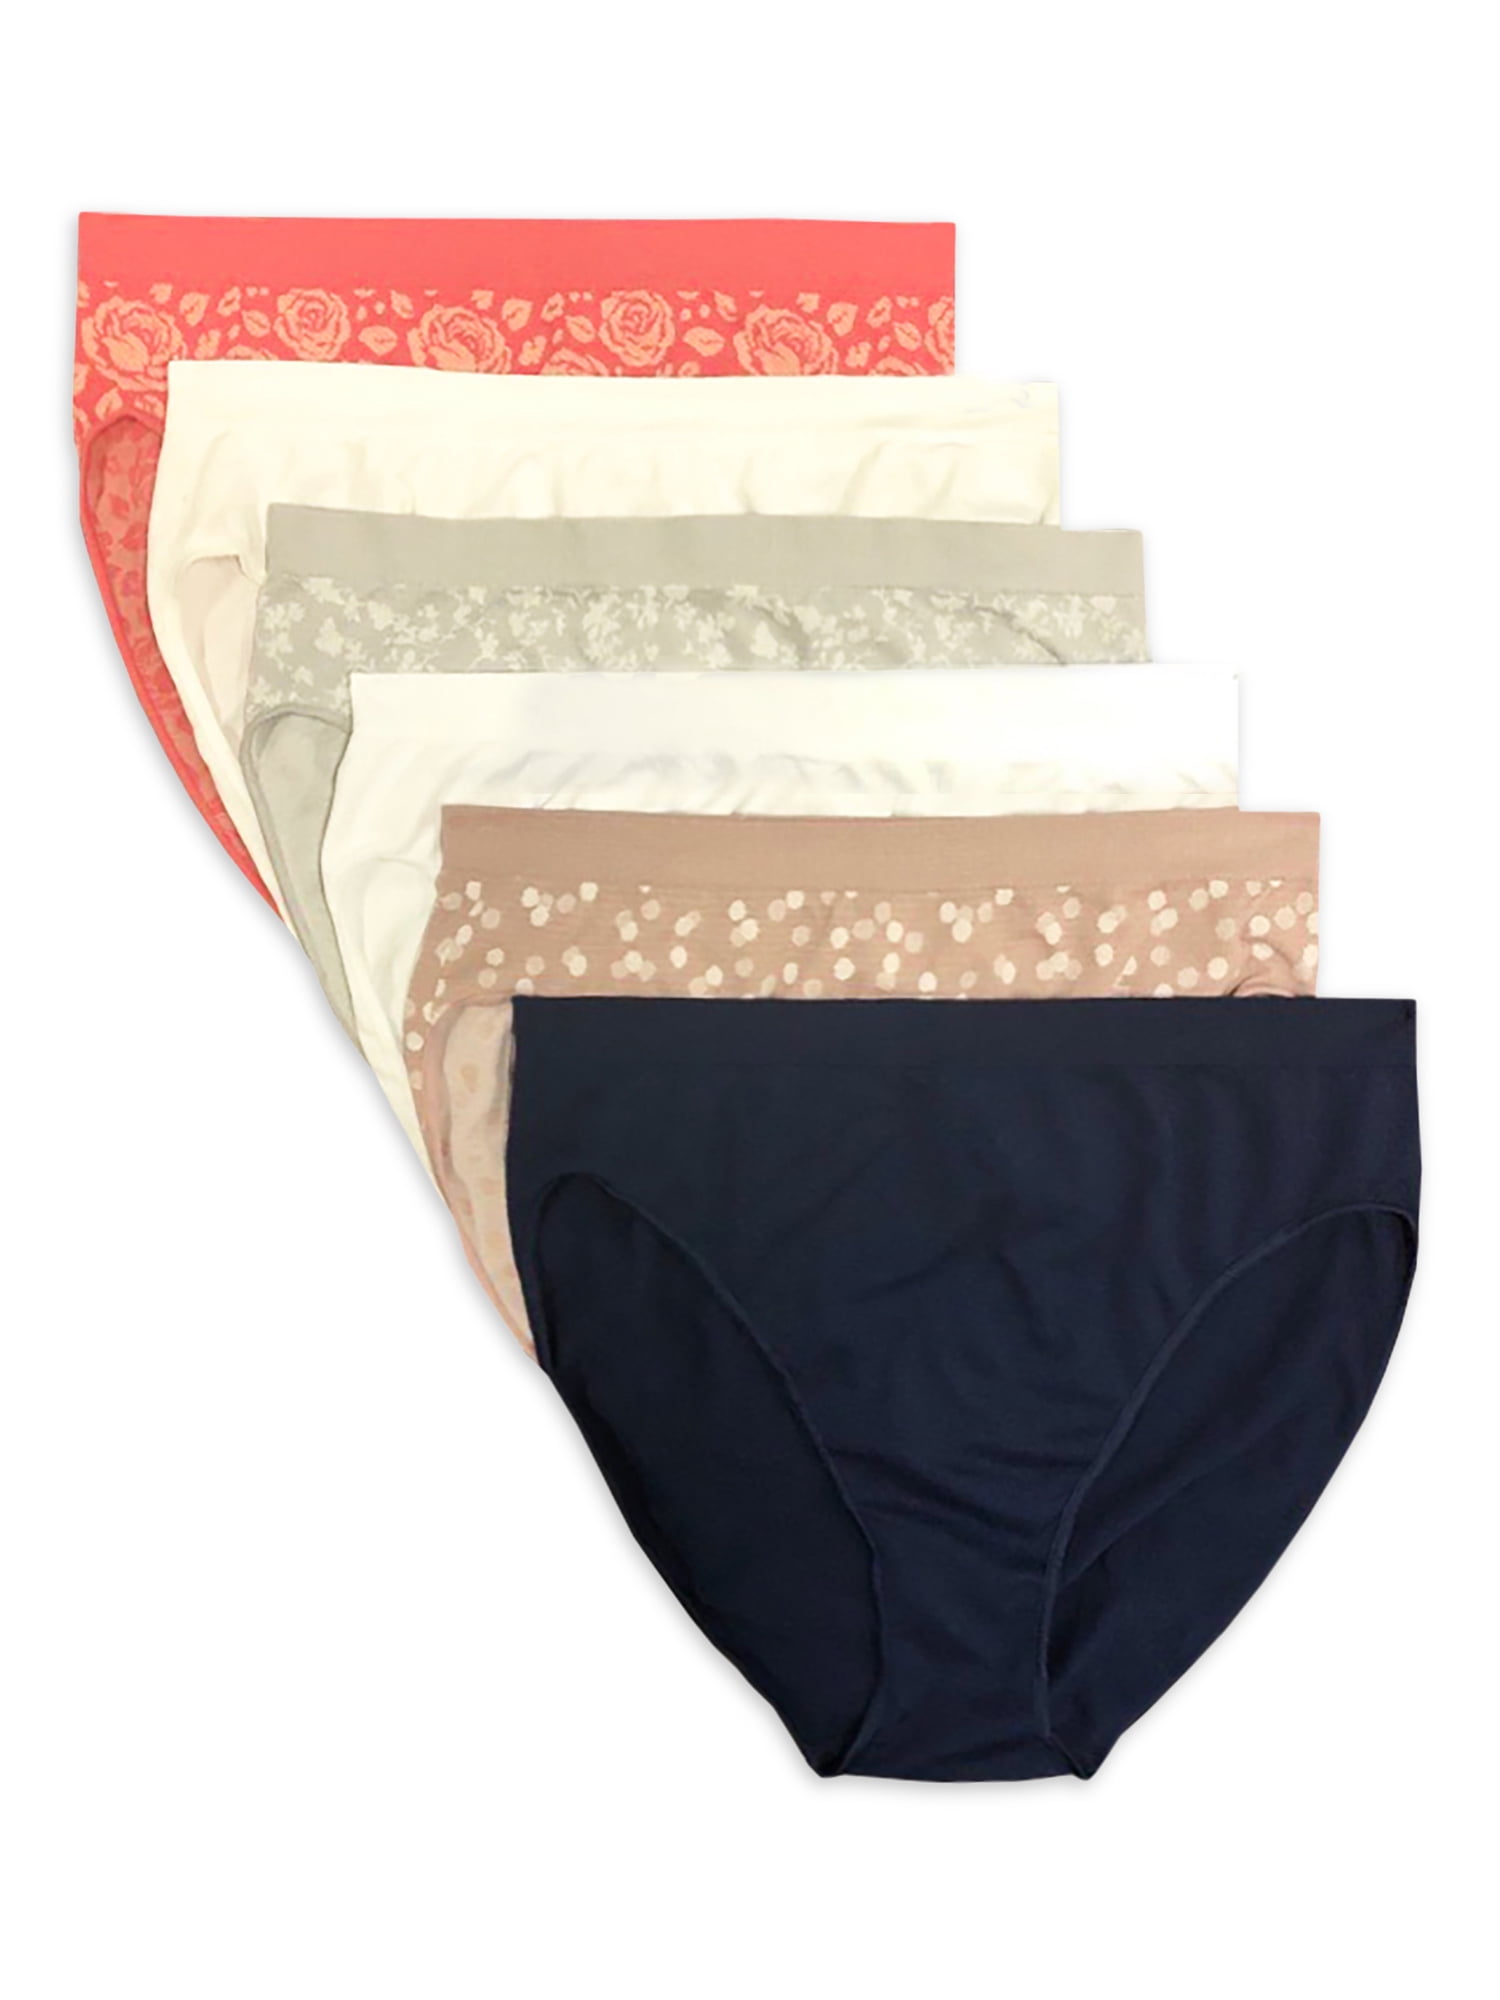 4 Pair Vintage Secret Treasures Hi-Leg Bikini Underwear Panty Size Medium  (6)